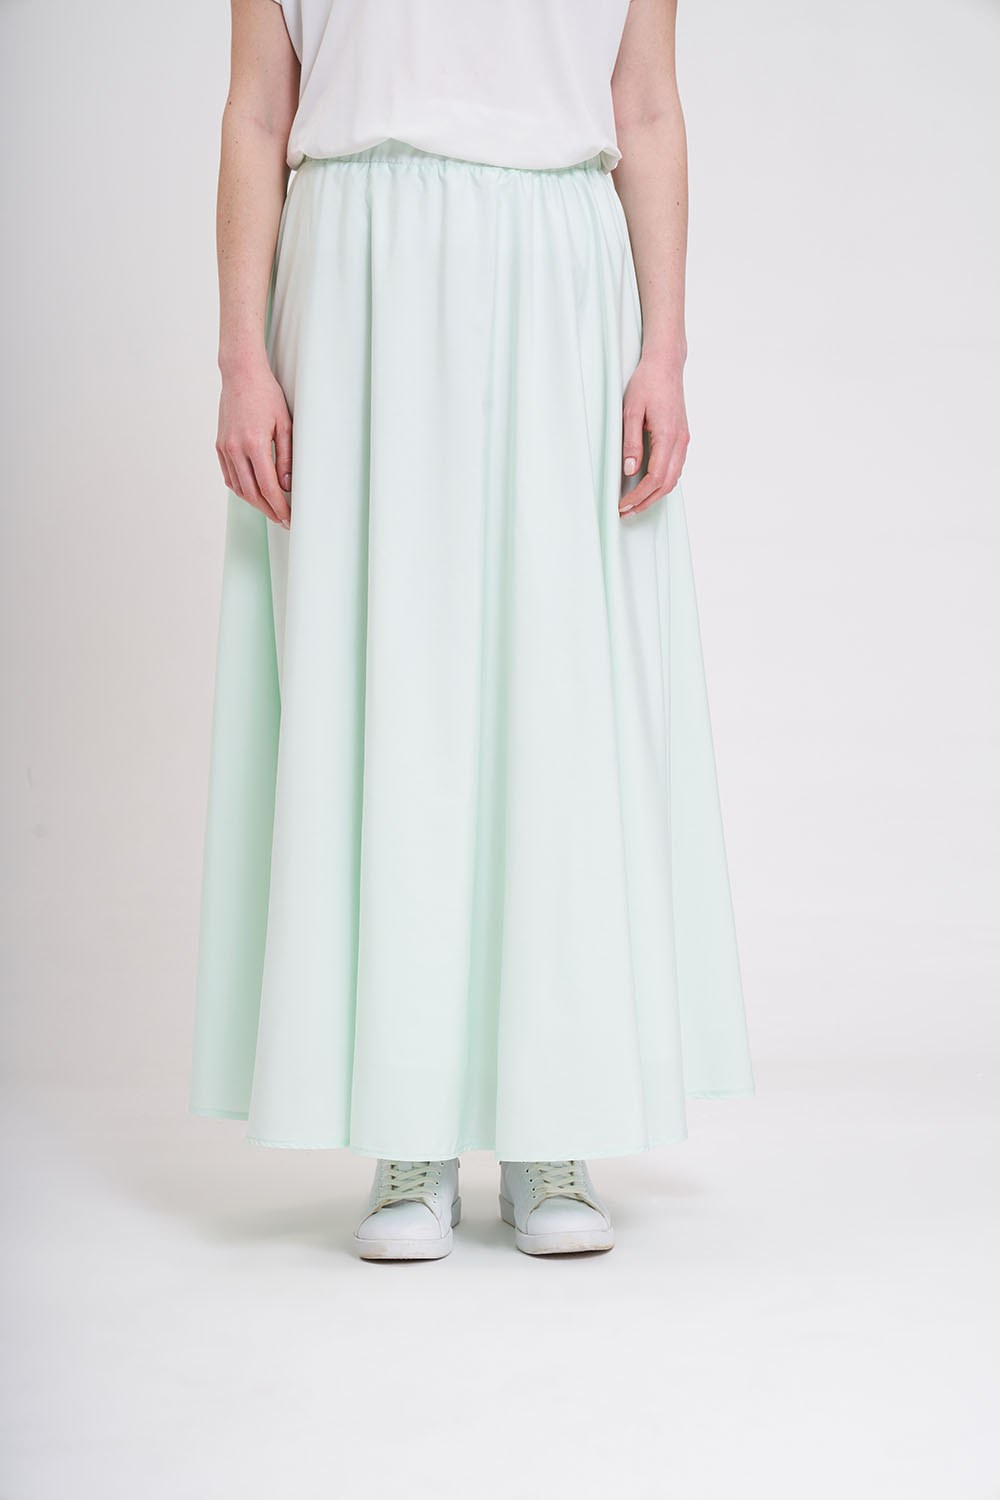 Micro Elastic Skirt (Mint) 